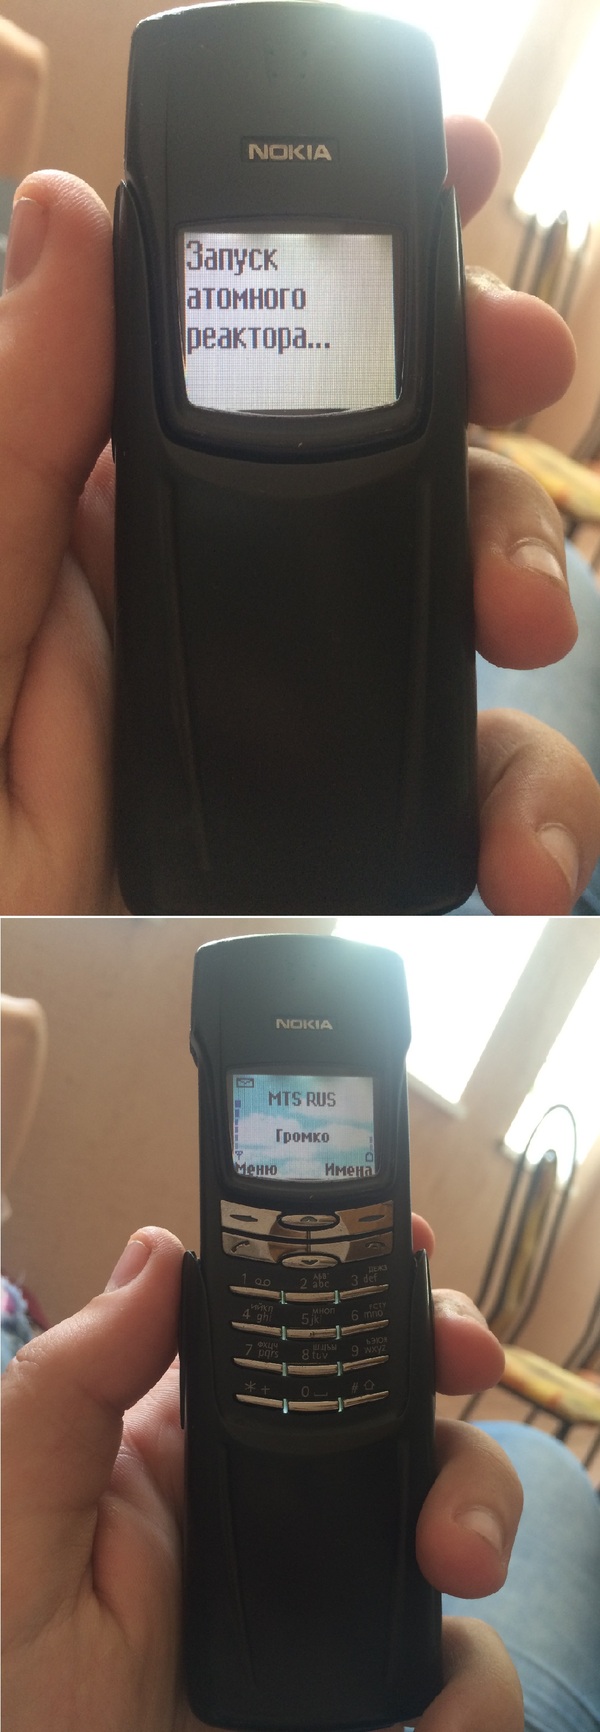    Nokia -  U235,  U235 - connecting people! Nokia 8910i, Nokia, , 90-,  u235,  , 